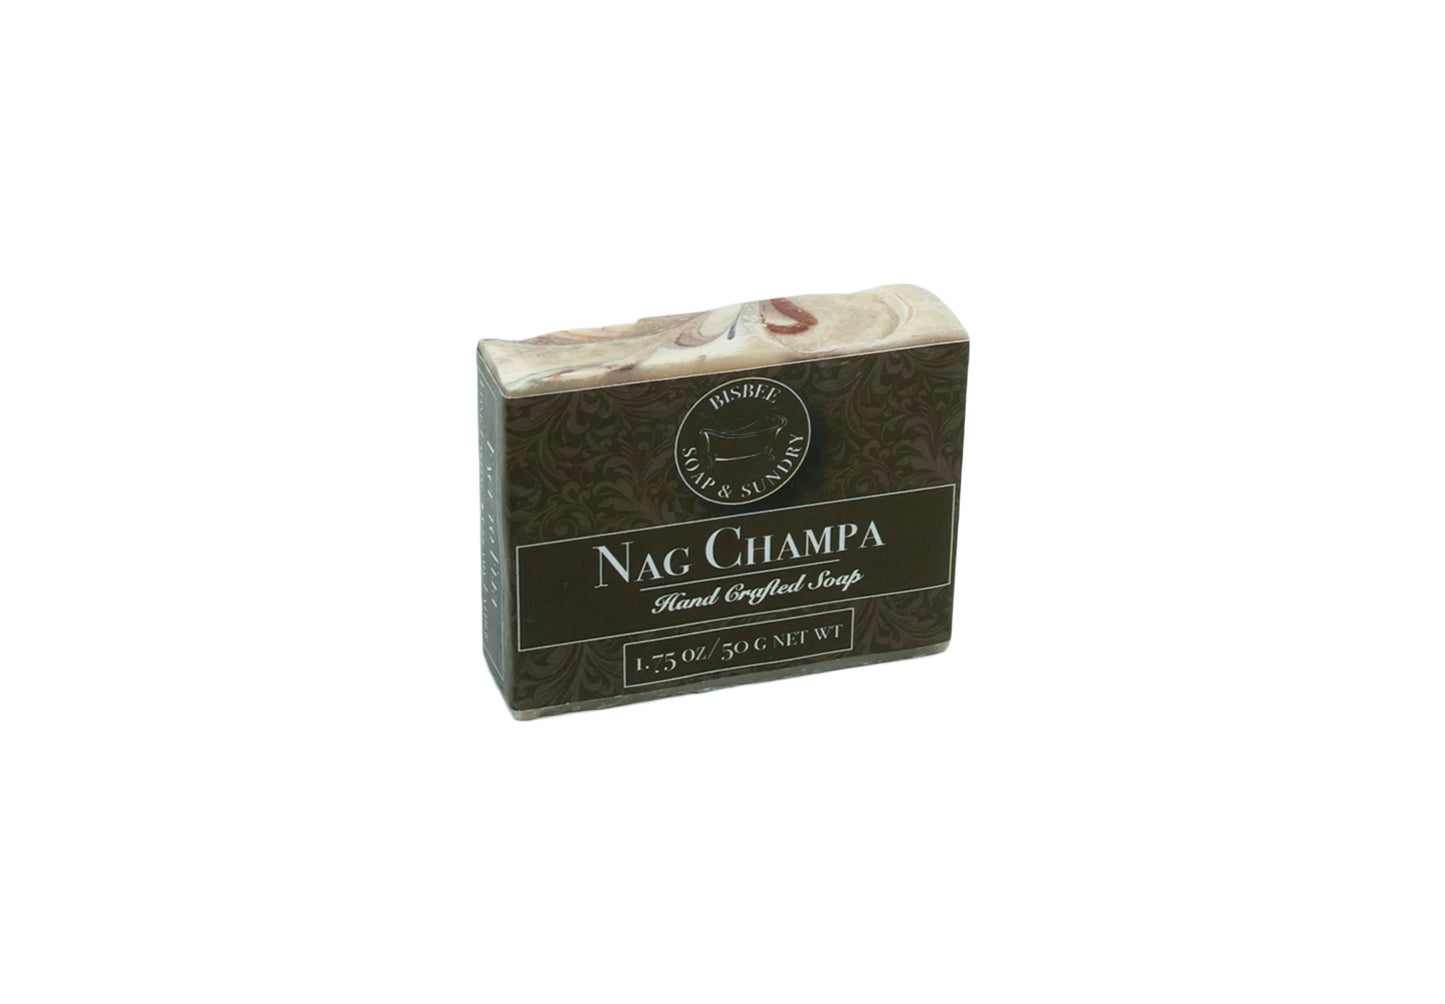 Nag Champa Organic Soap